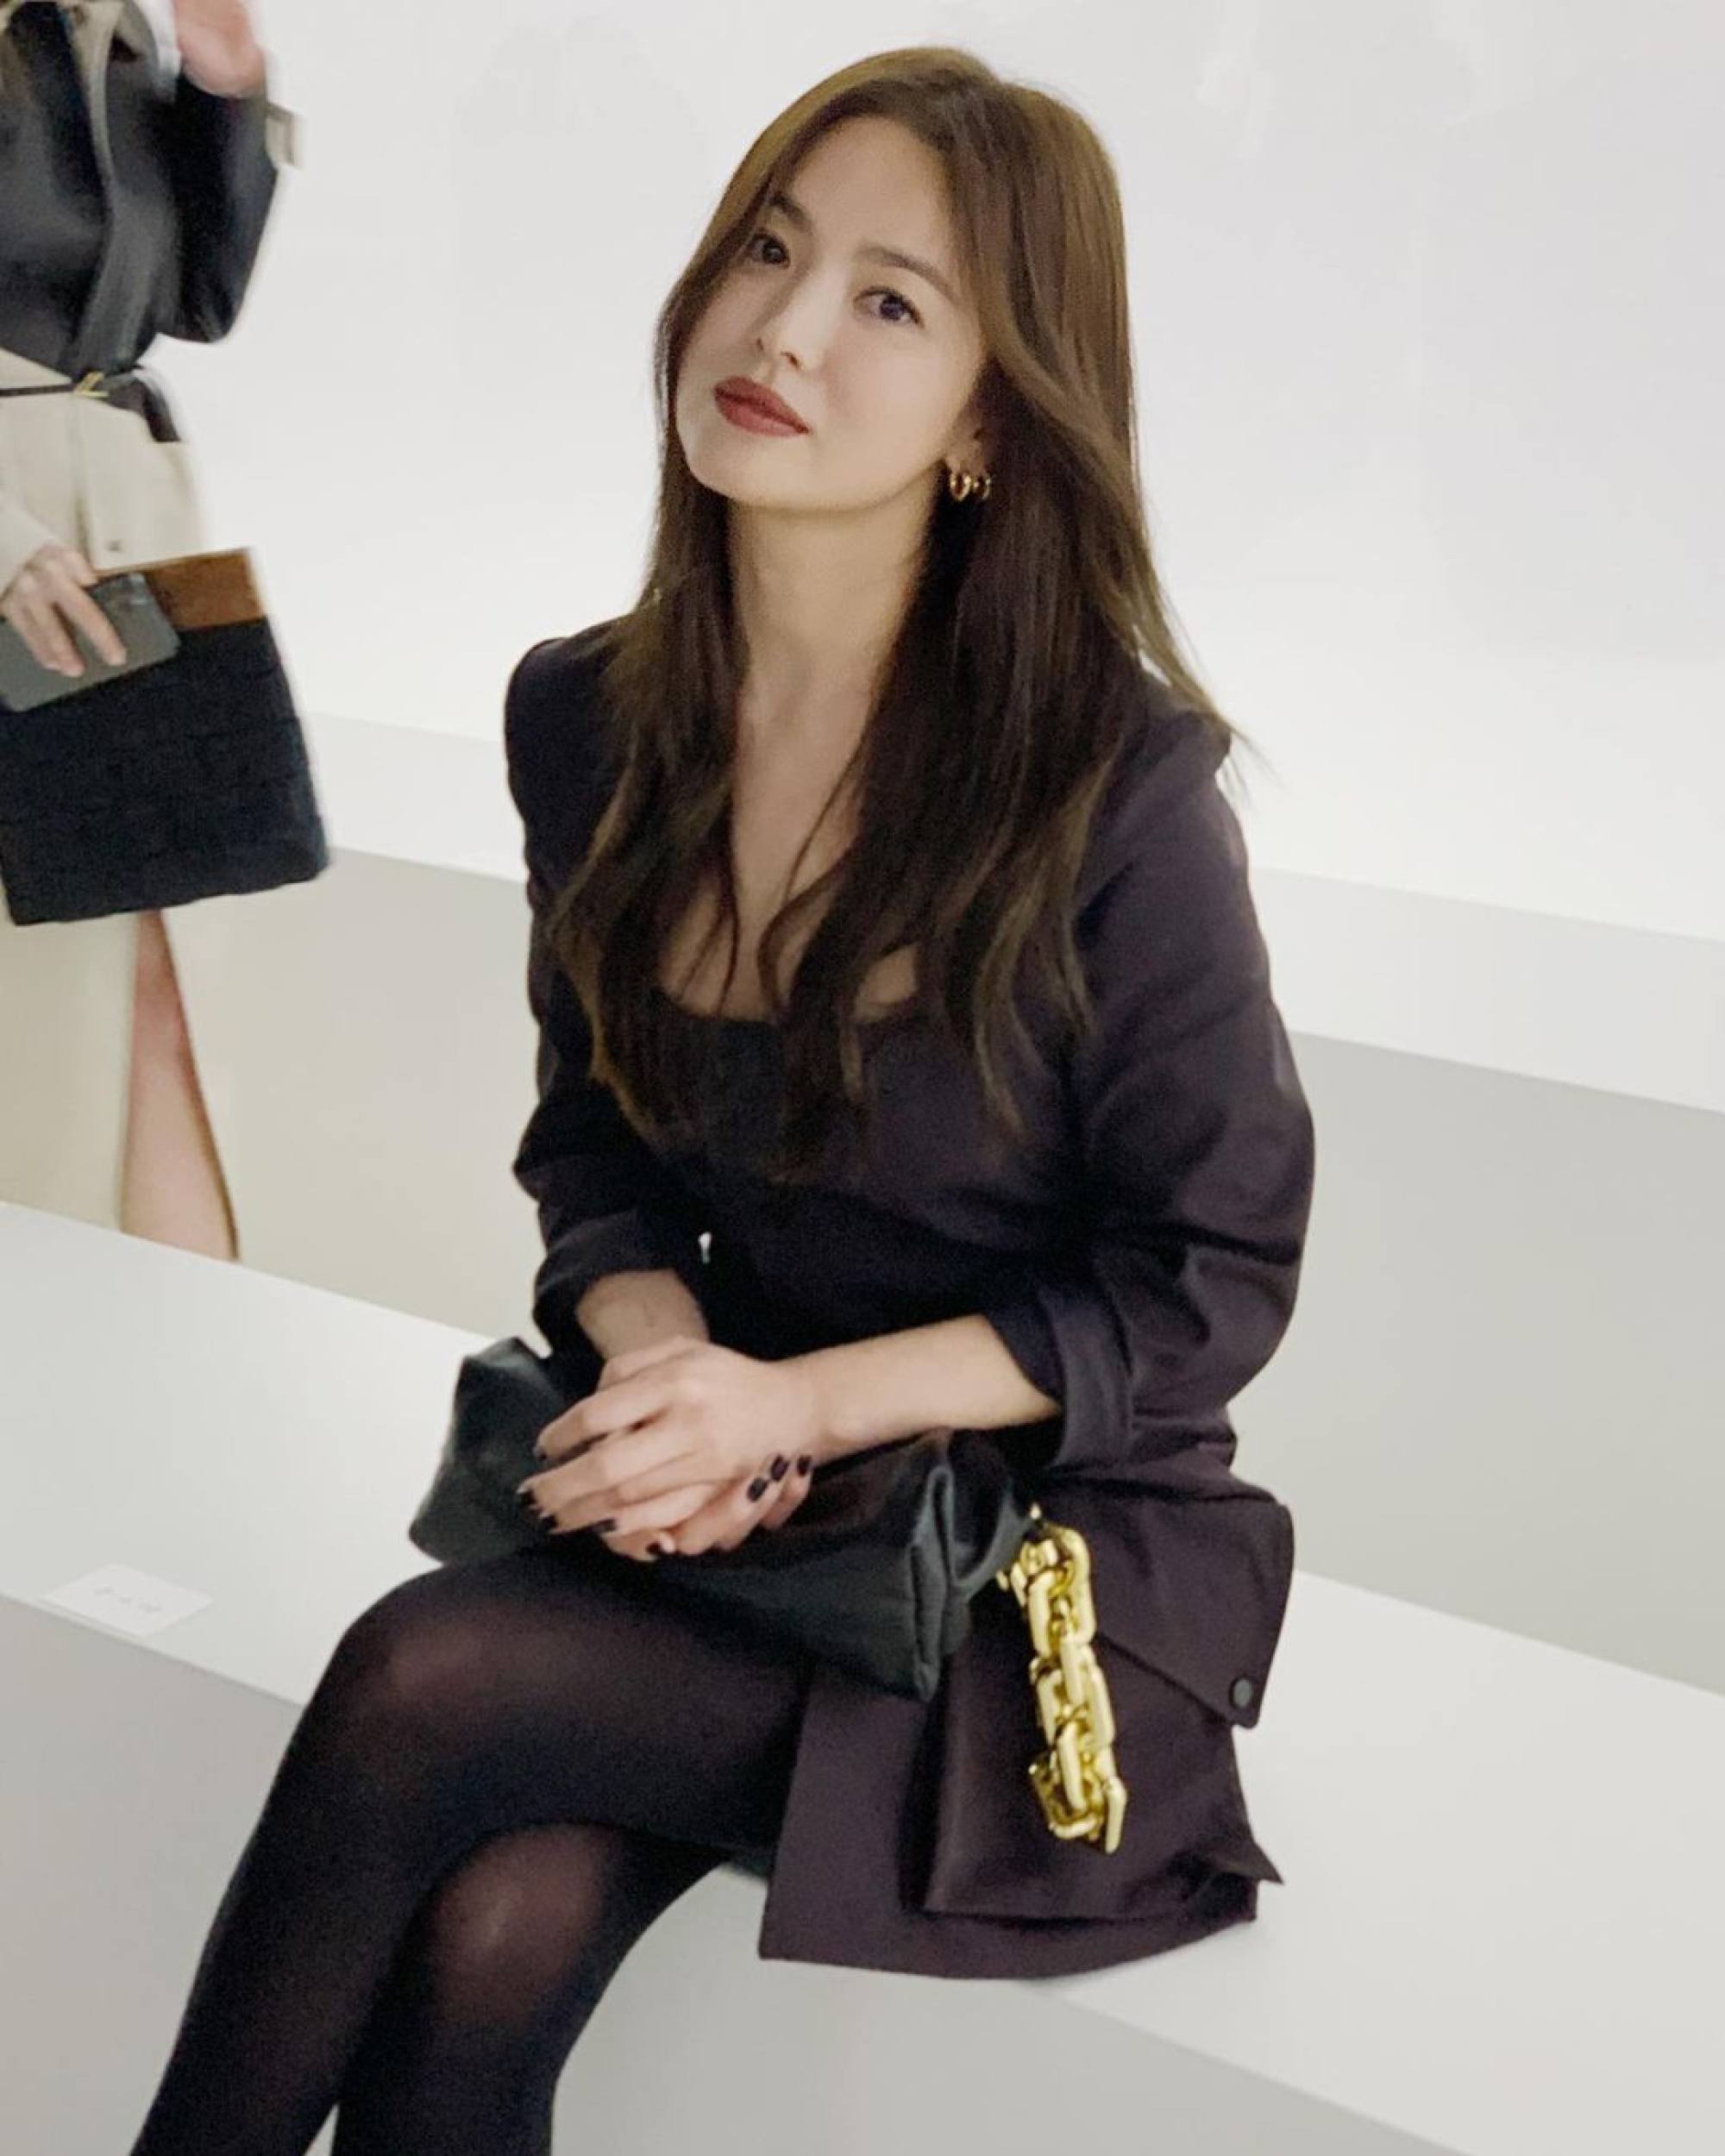 Lancôme Announces Hoyeon Jung as Global Brand Ambassador